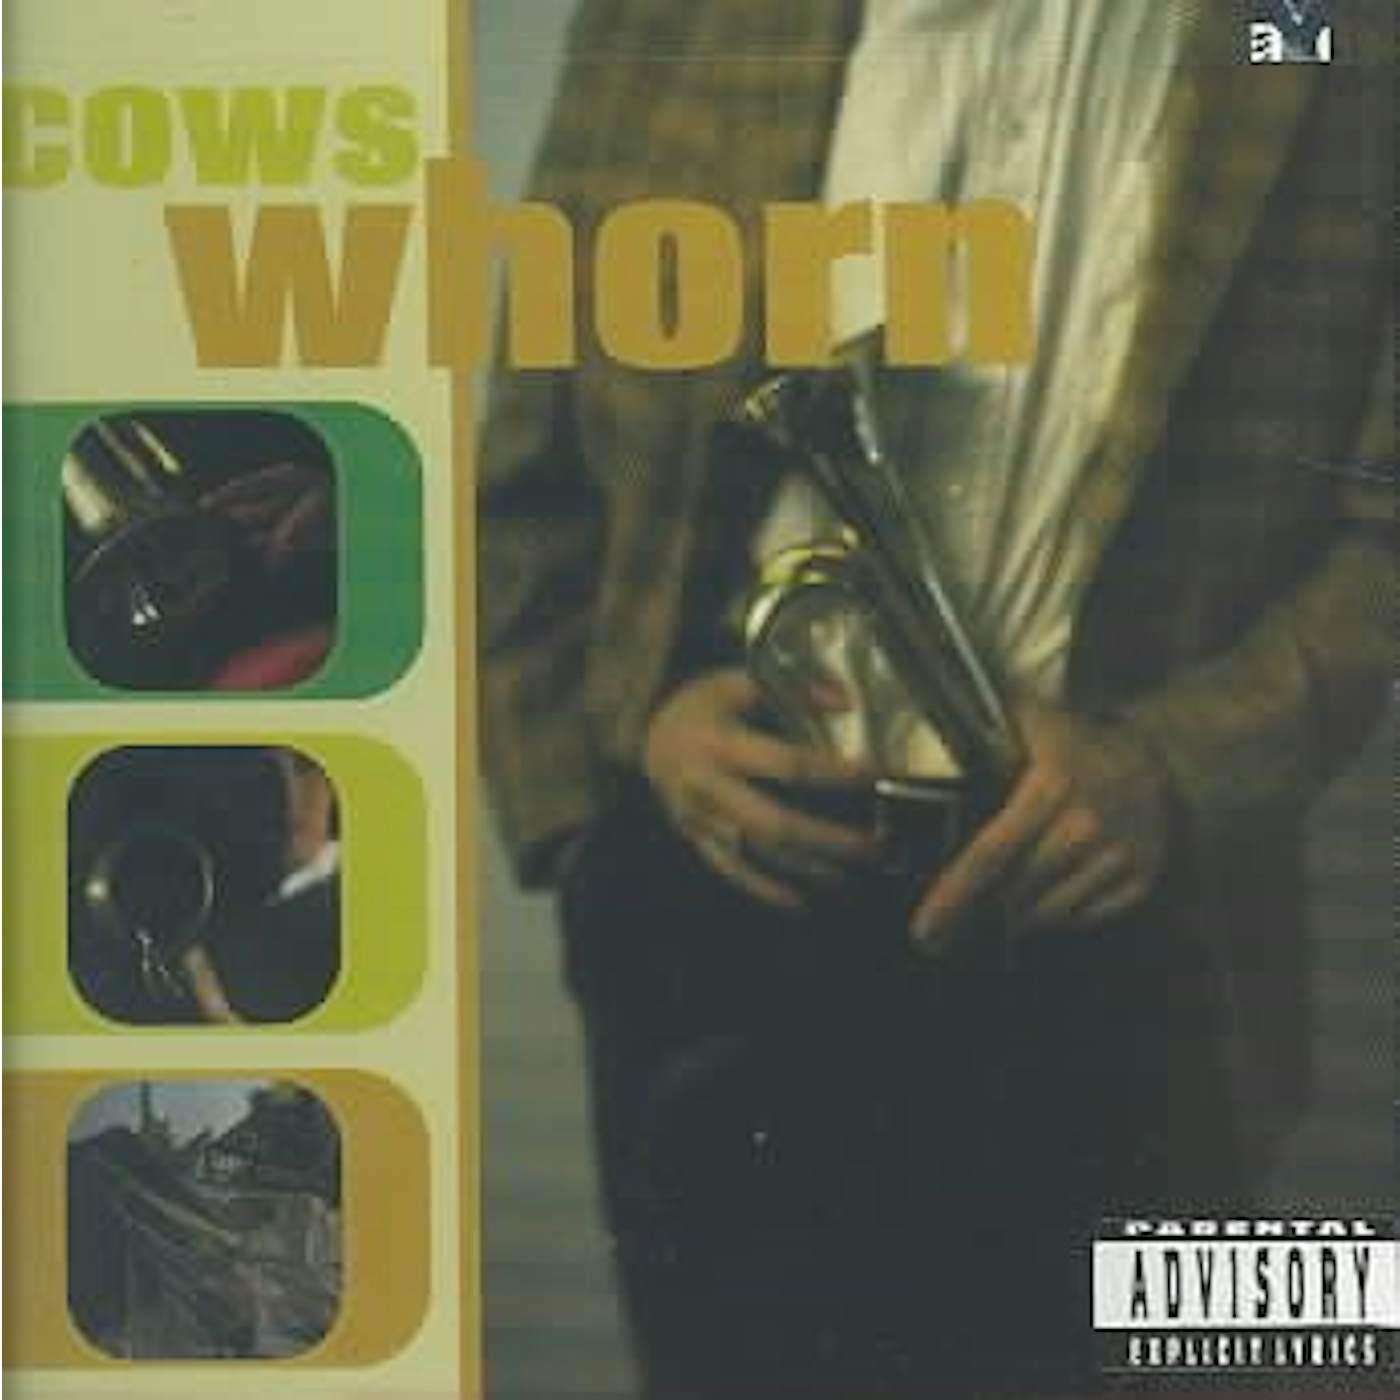 Cows Whorn CD